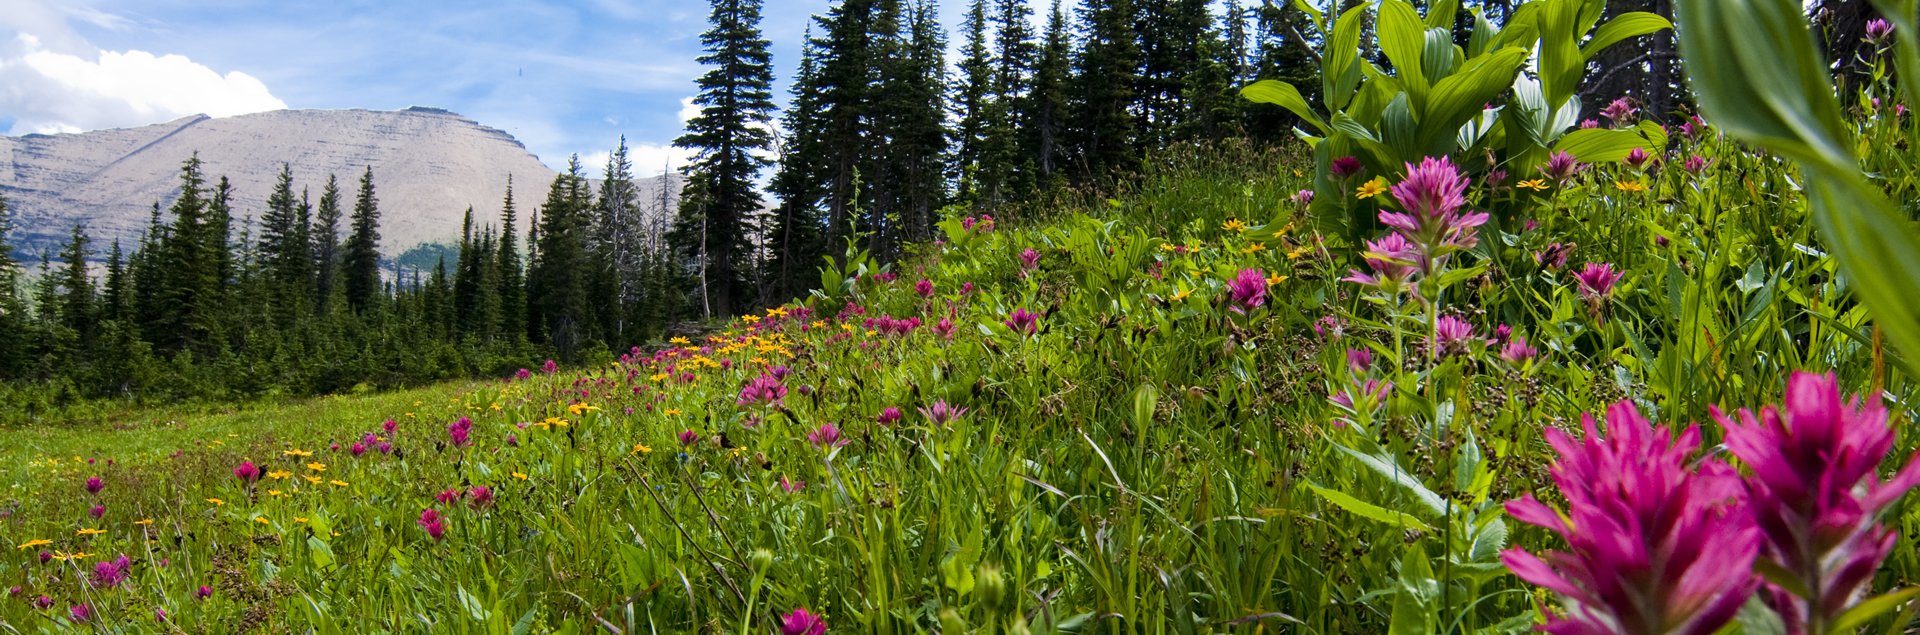 Montana Flower field